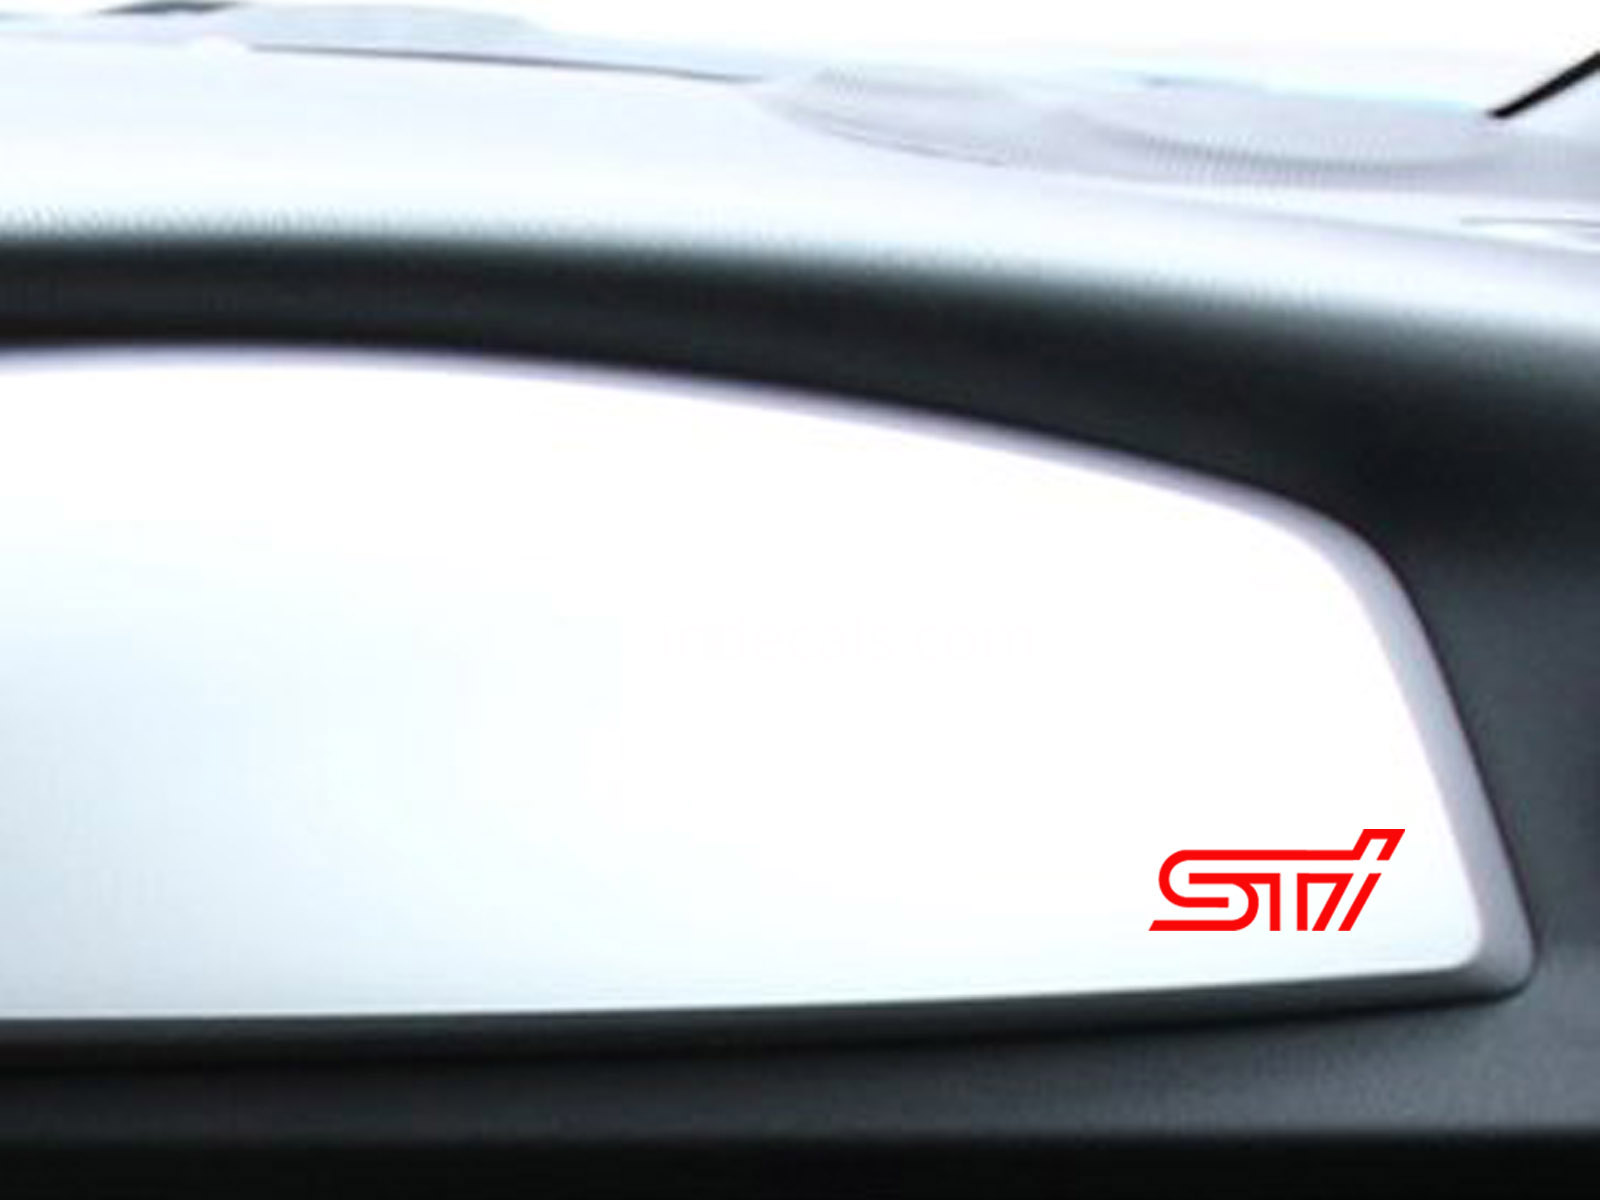 2 x Subaru STI stickers for Dash Trim - Red